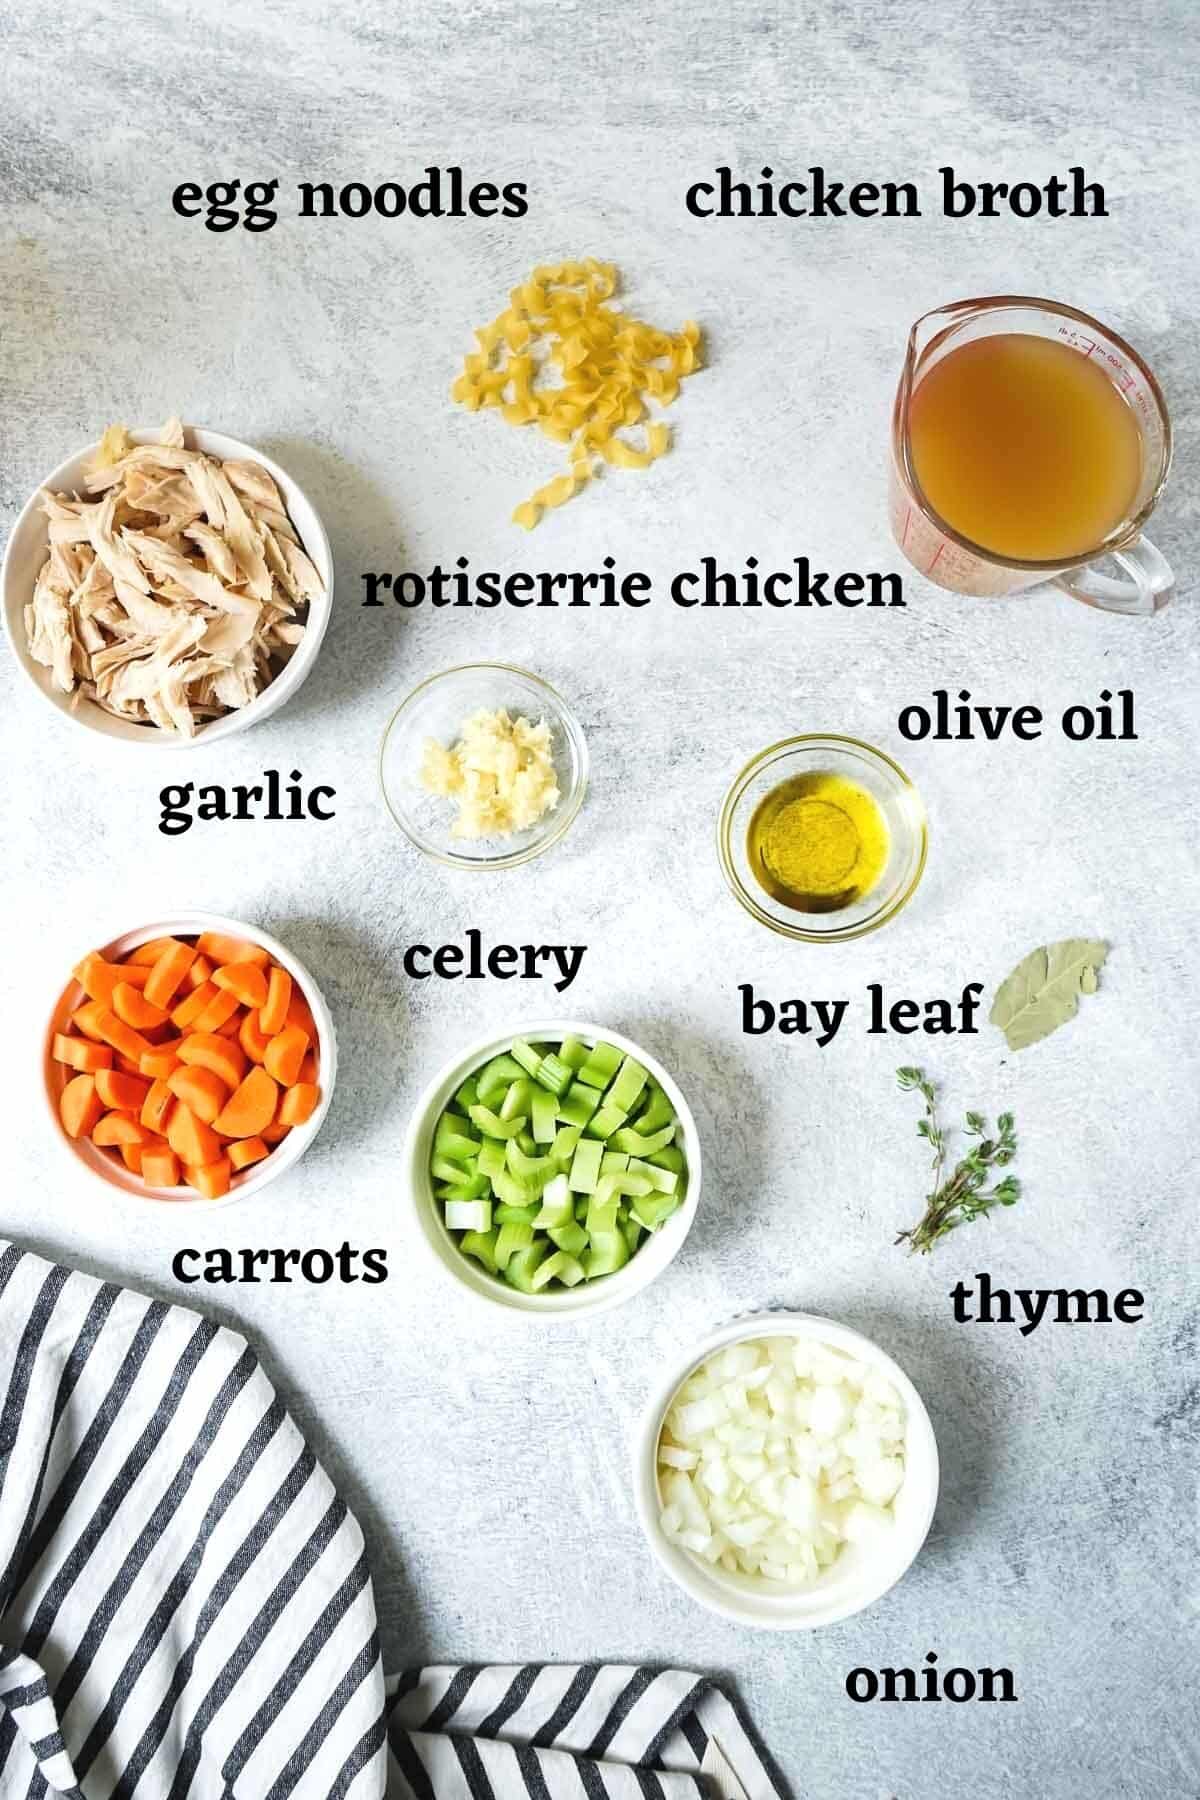 Ingredients needed to make Chrissy Teigen's Chicken Noodle soup.